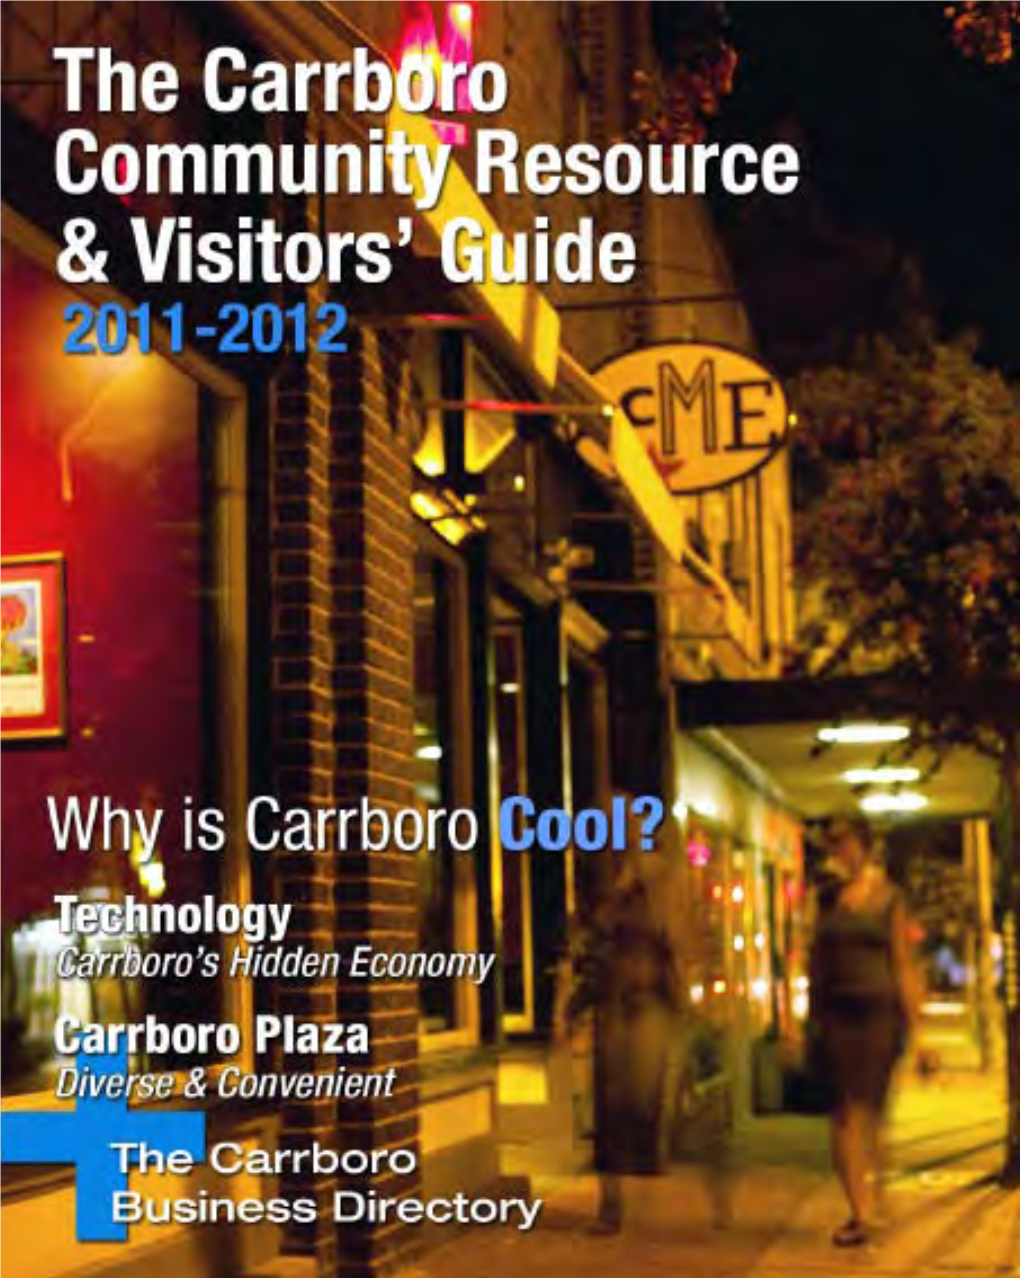 1 Carrboro Community Resource & Visitors' Guide: 2011